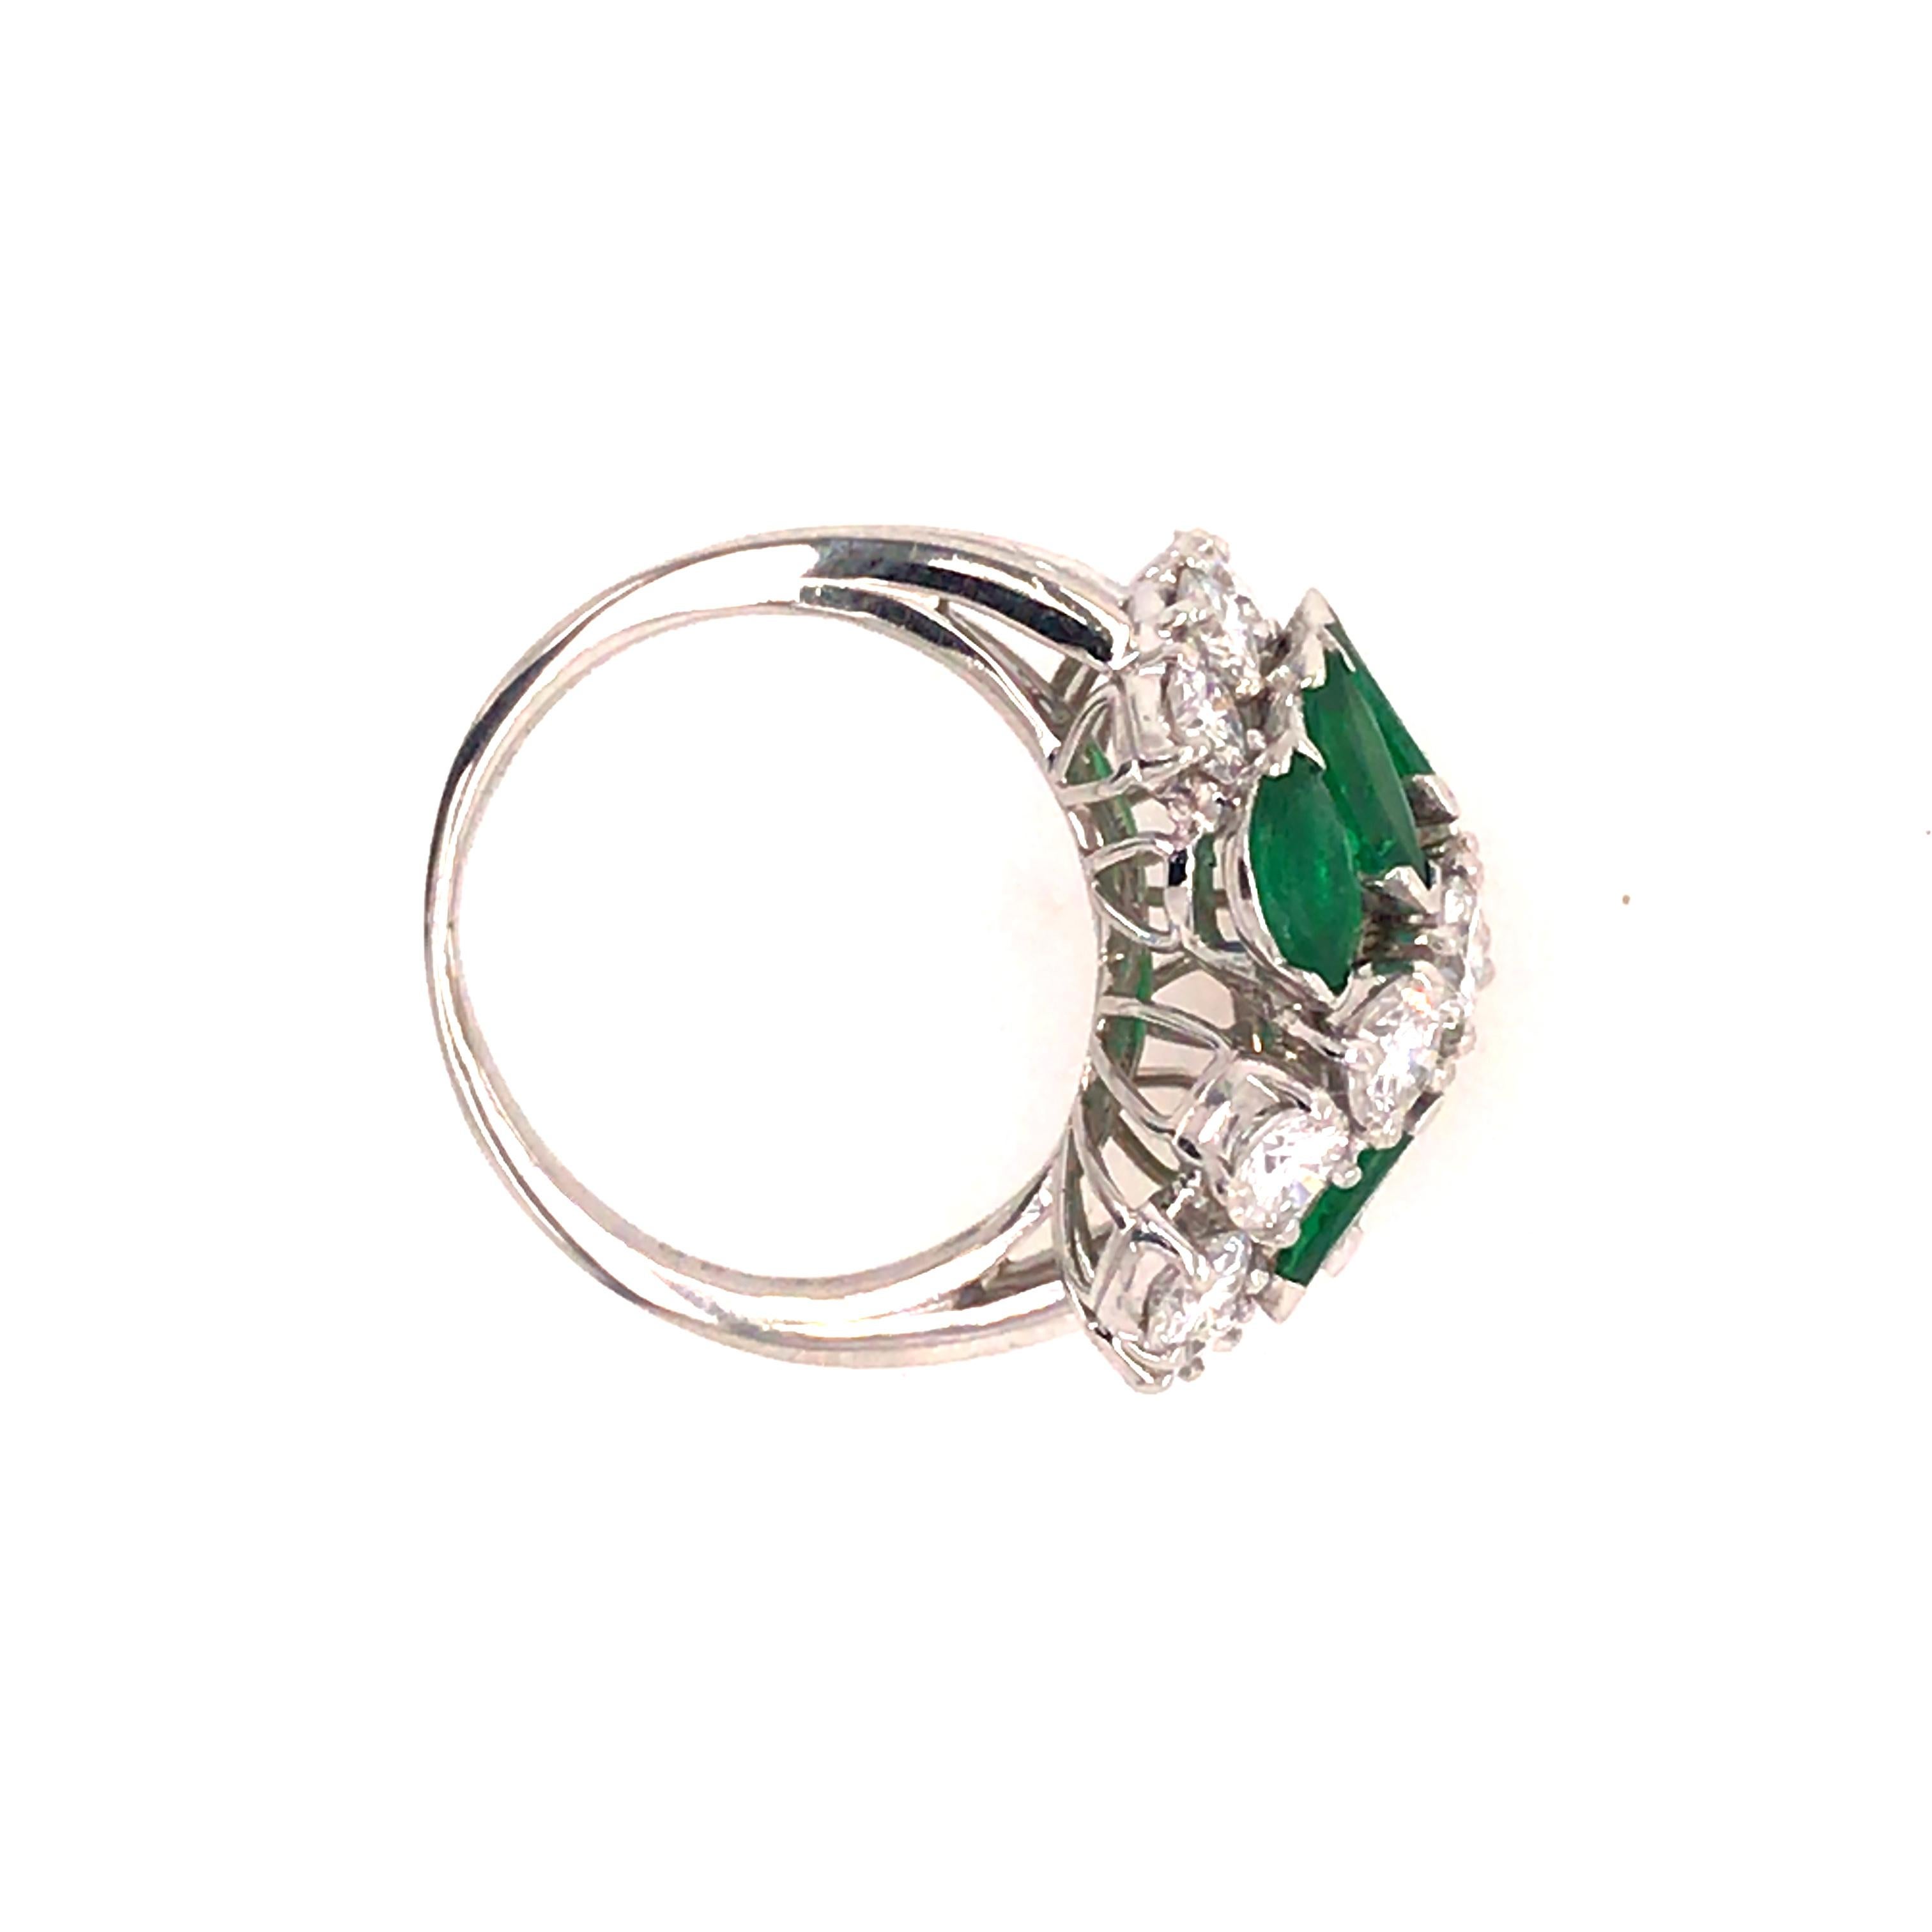 Women's Oscar Heyman Emerald and Diamond Ring in Platinum